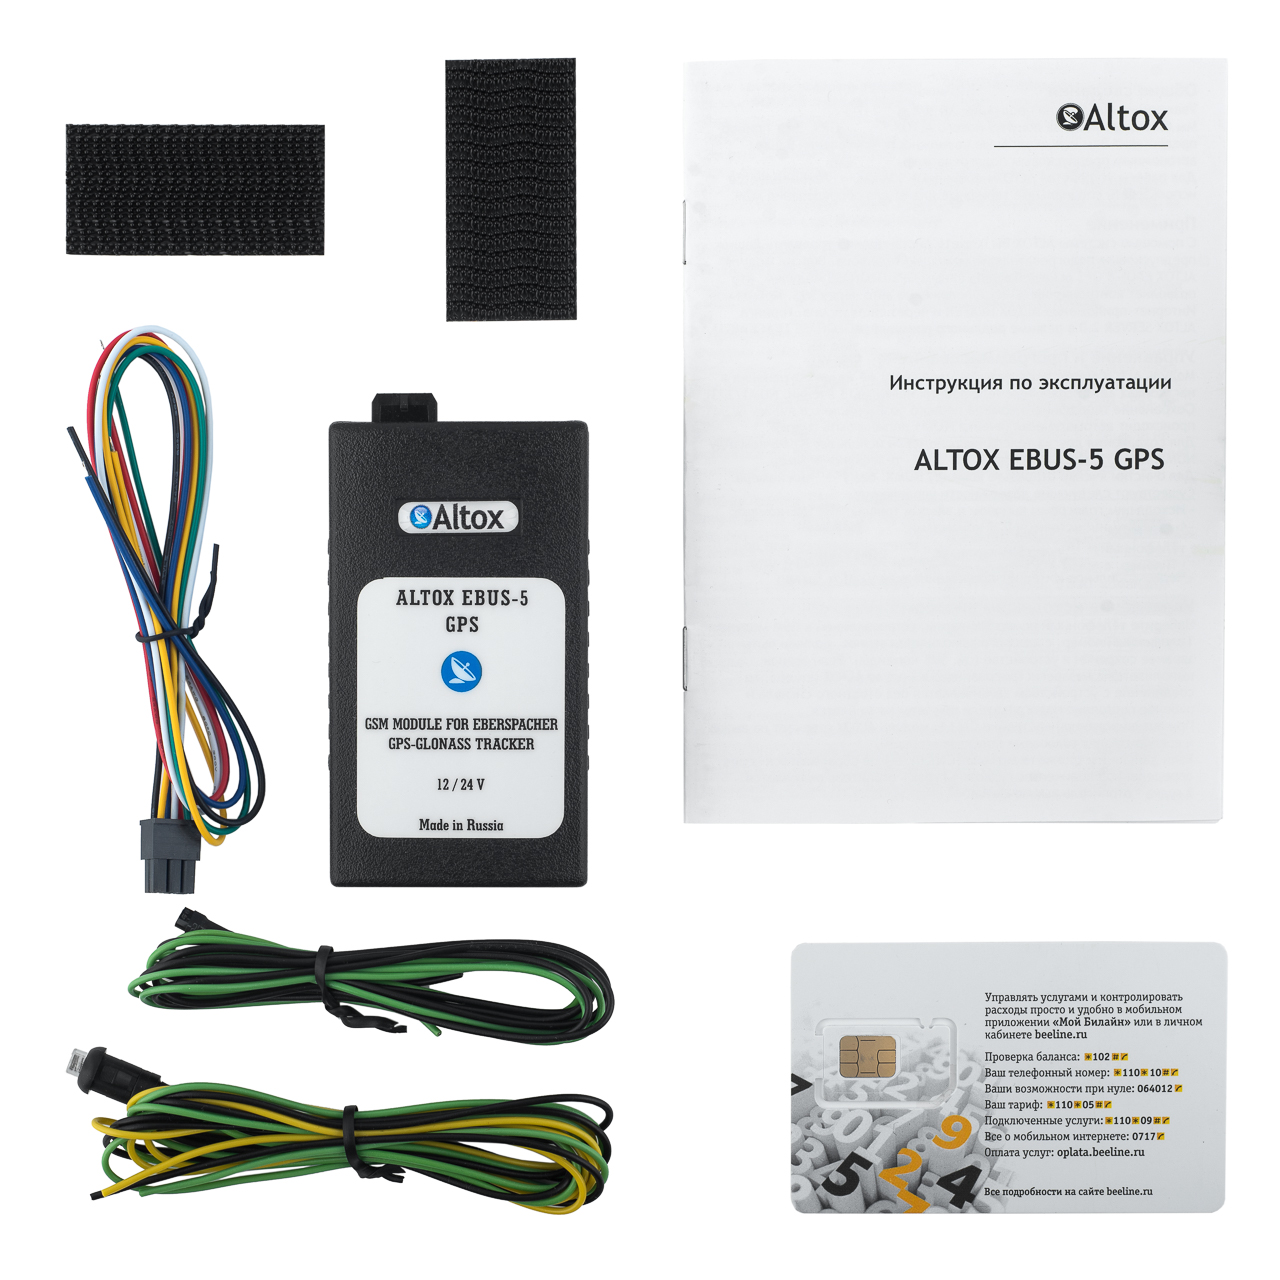 Eberspacher with GPS GSM control unit Altox WBUS-5 12В for Webasto